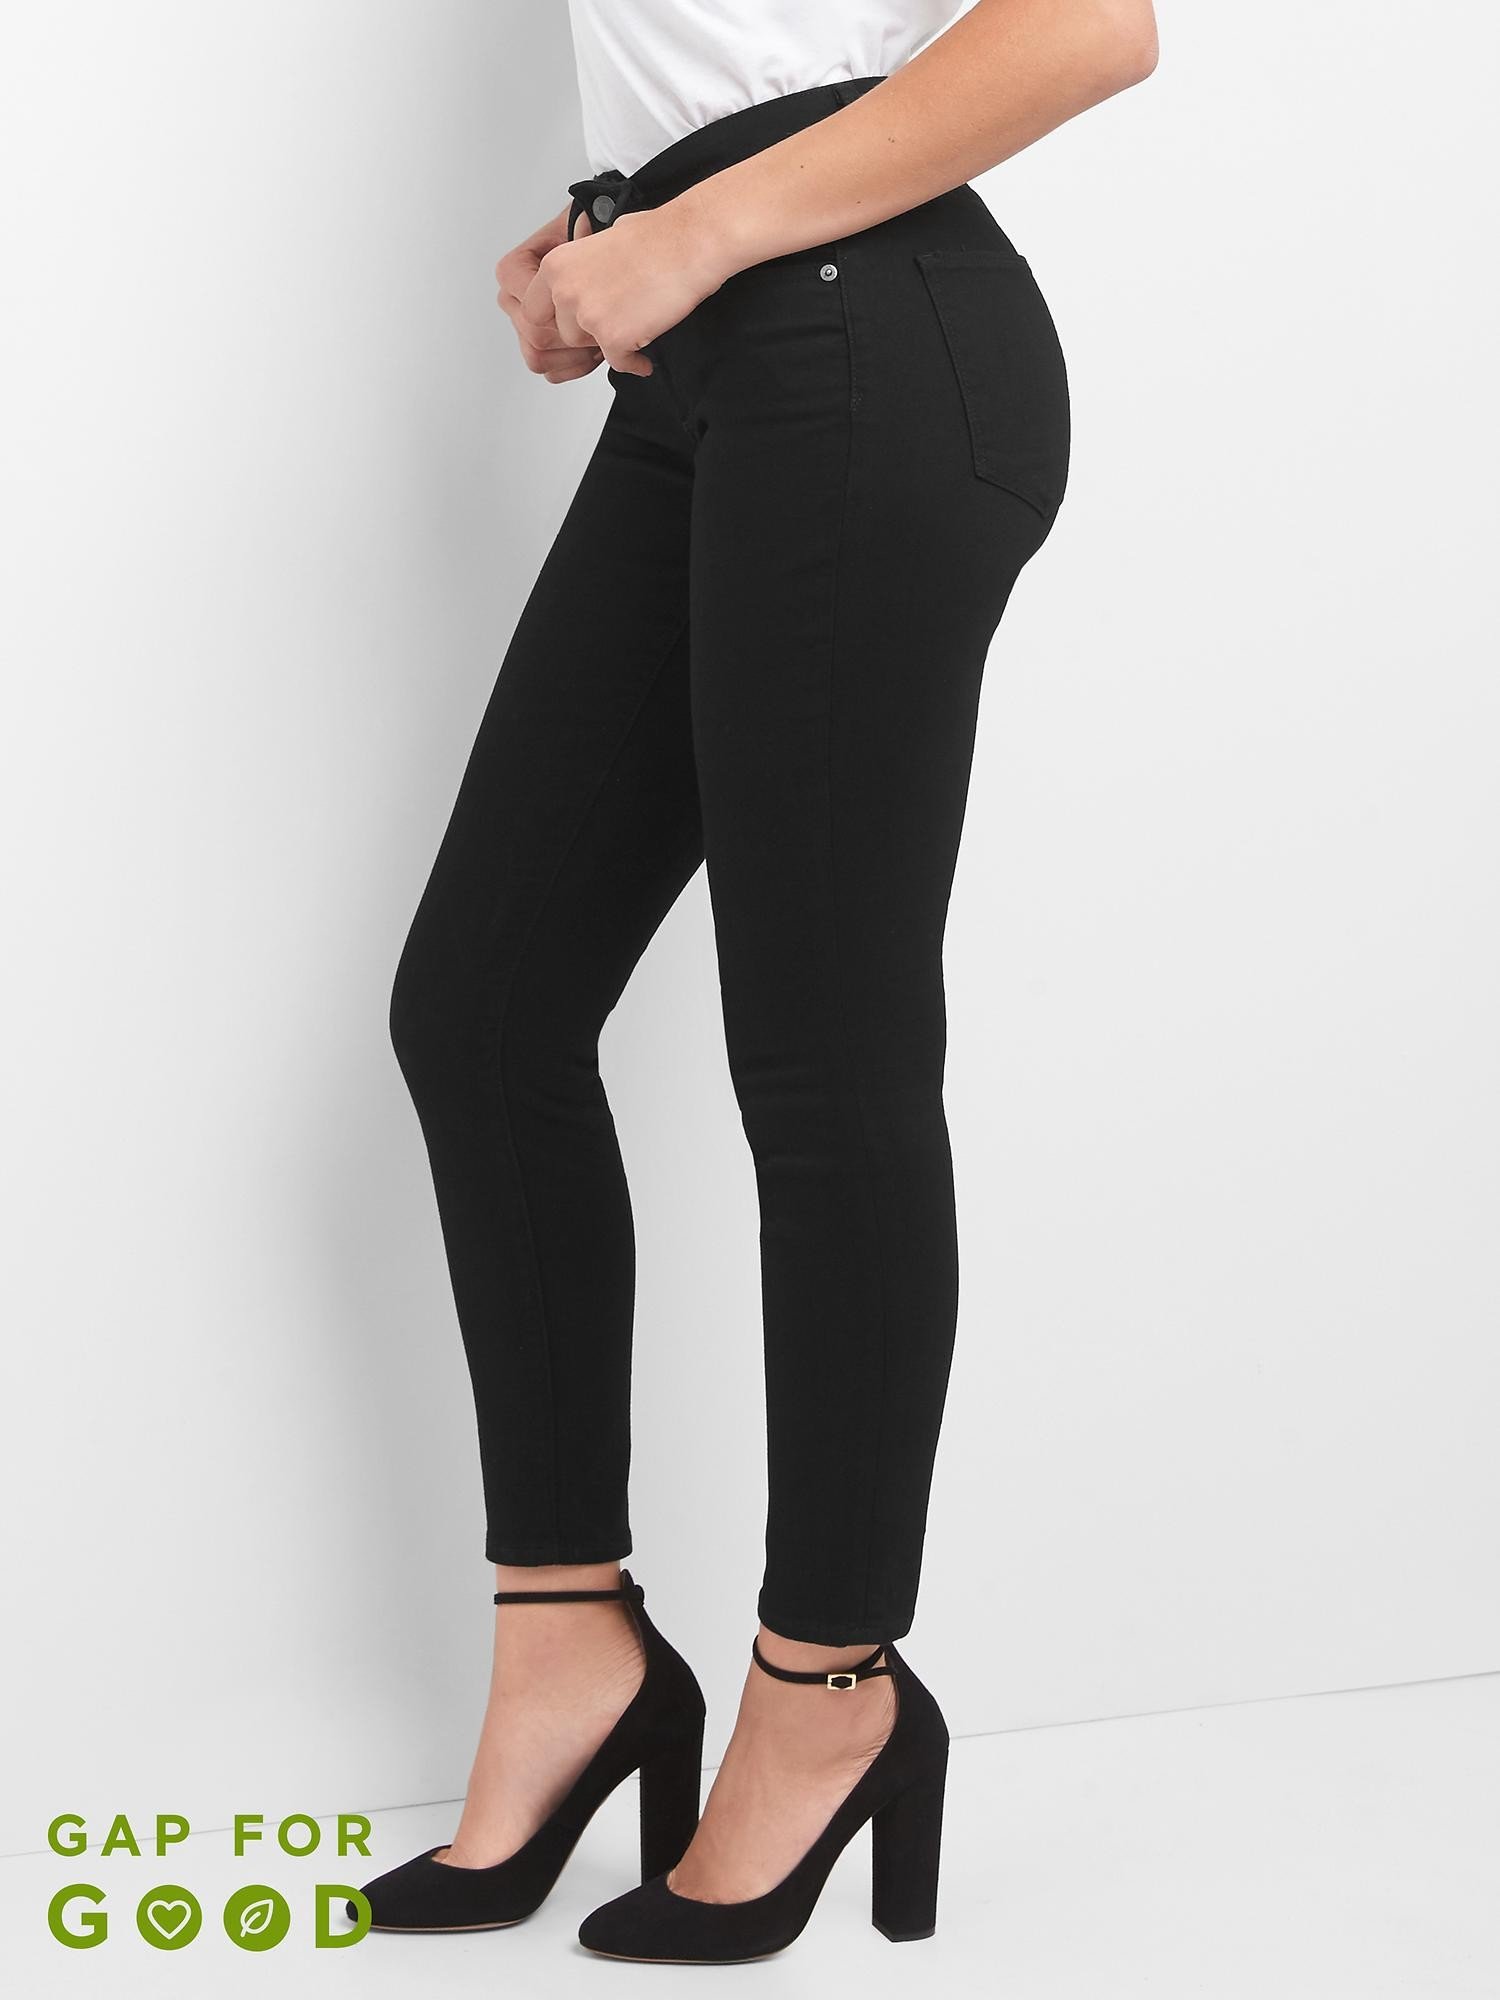 Orta belli curvy true skinny jean pantolon product image